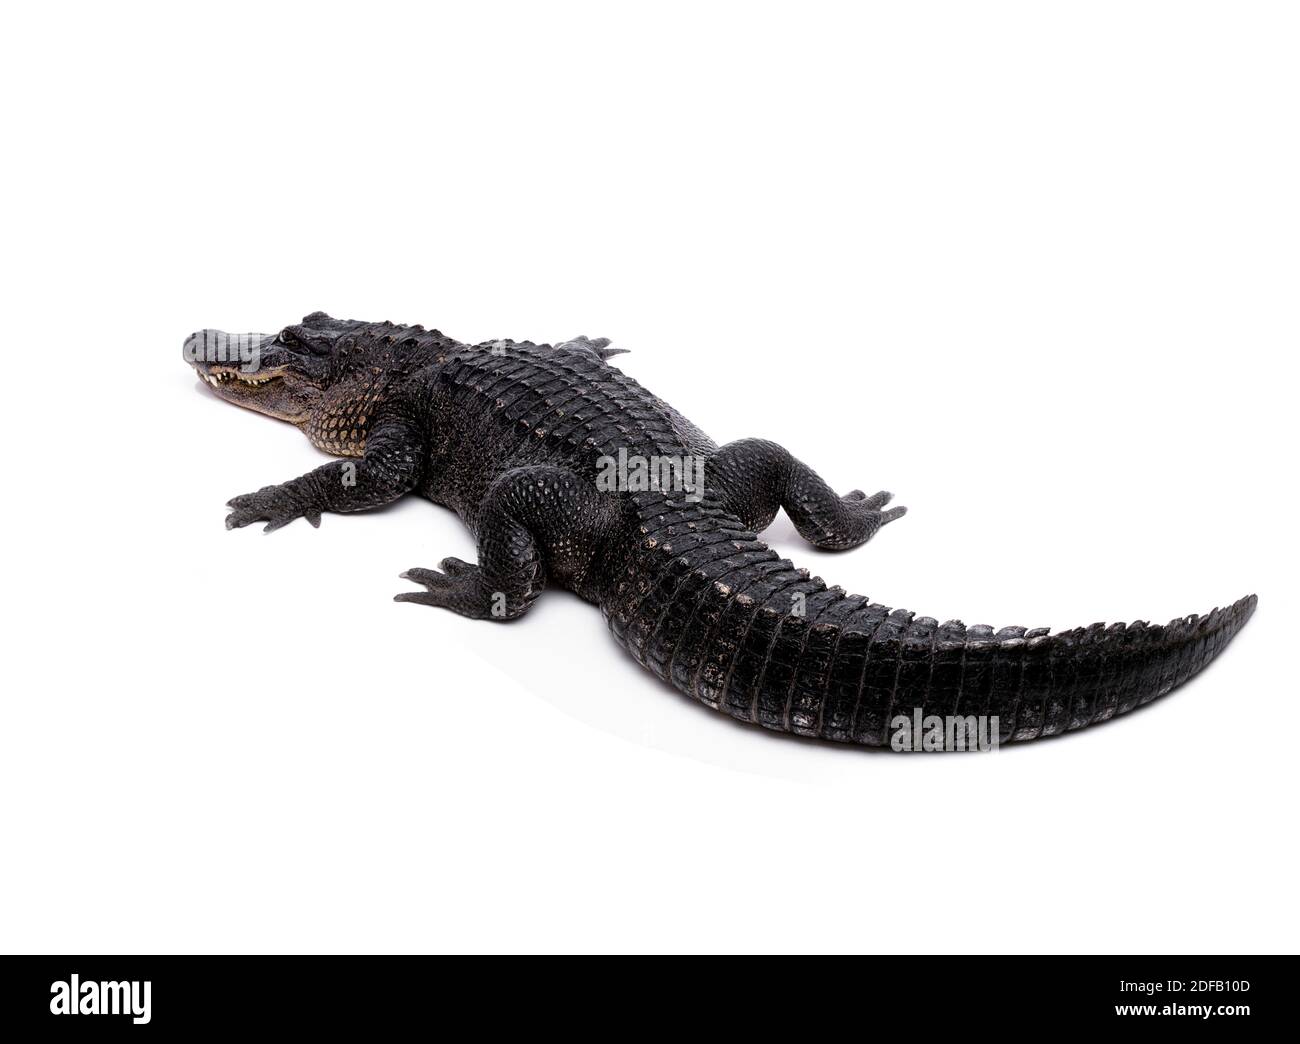 AMERICAN ALLIGATOR (Alligator mississippiensis) - studio shot Stock Photo